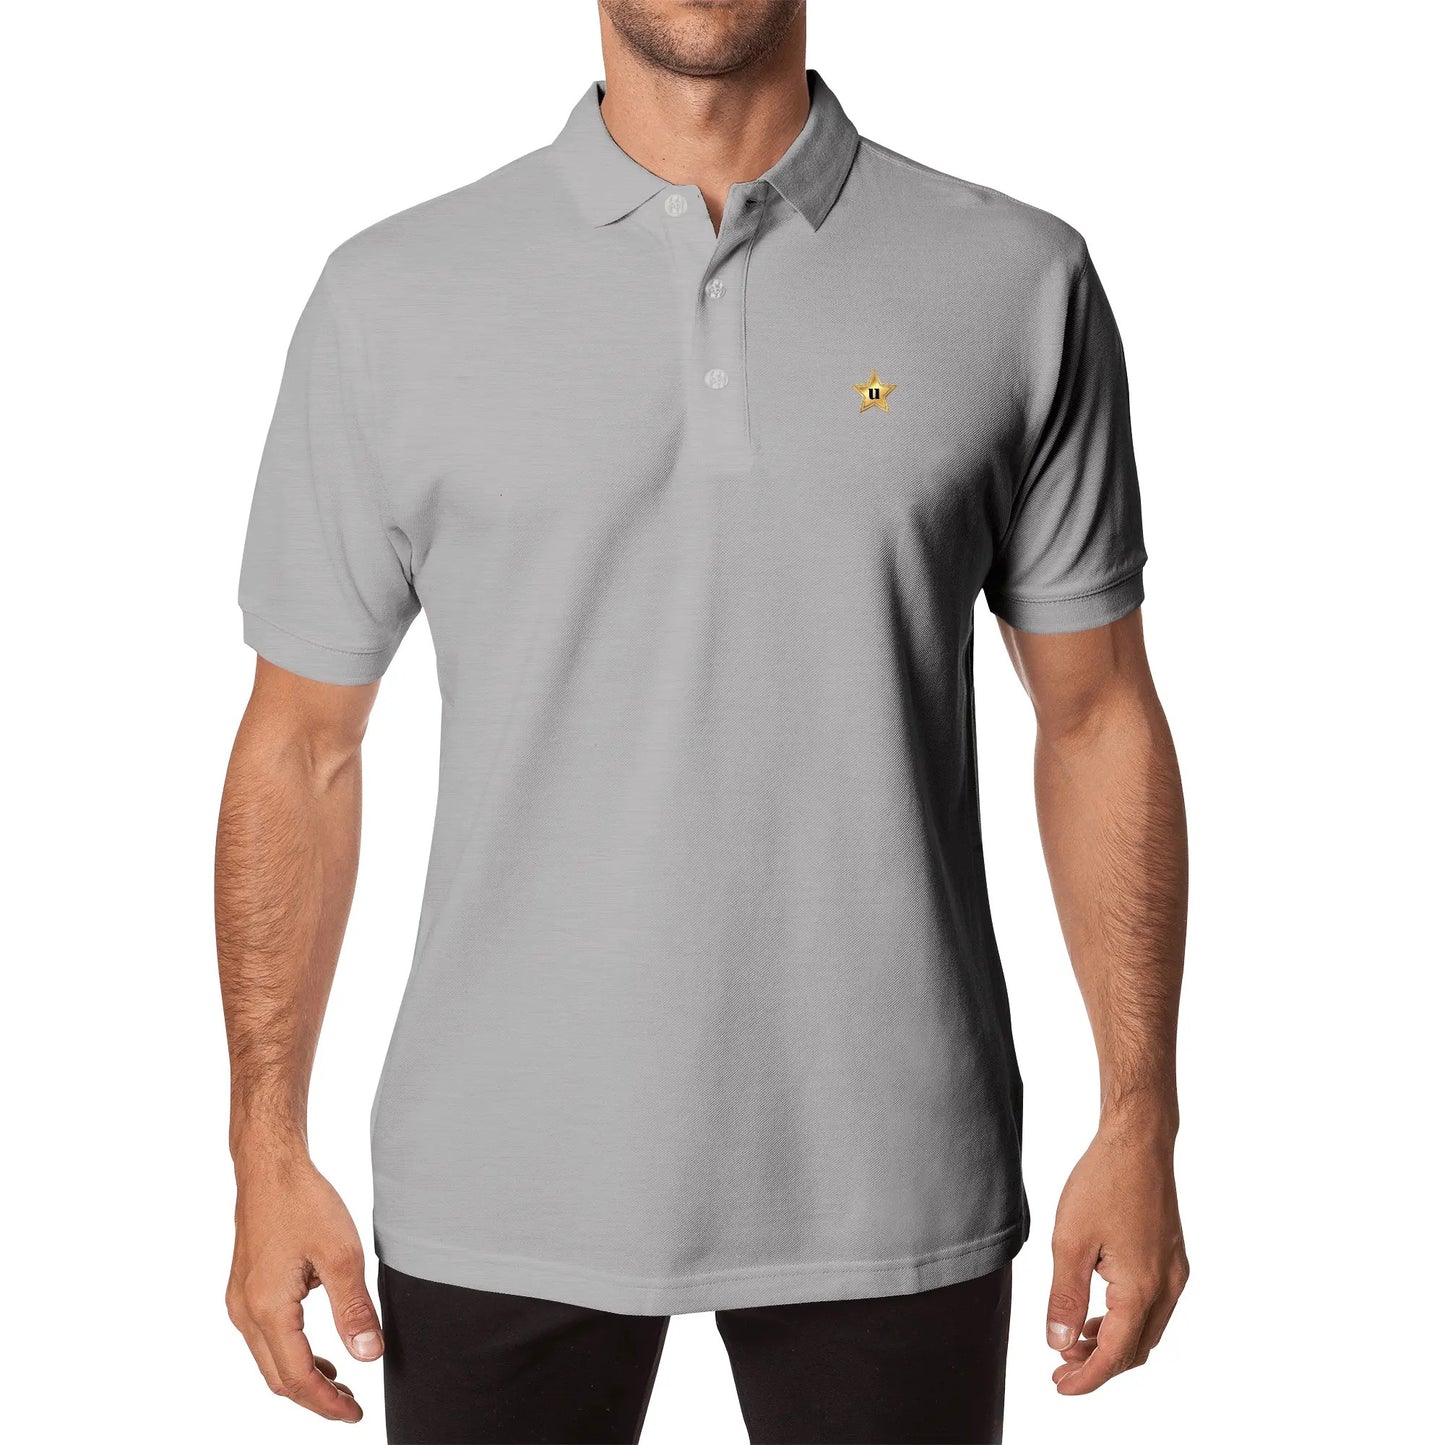 Unisex Half printed Cotton Polo Shirt